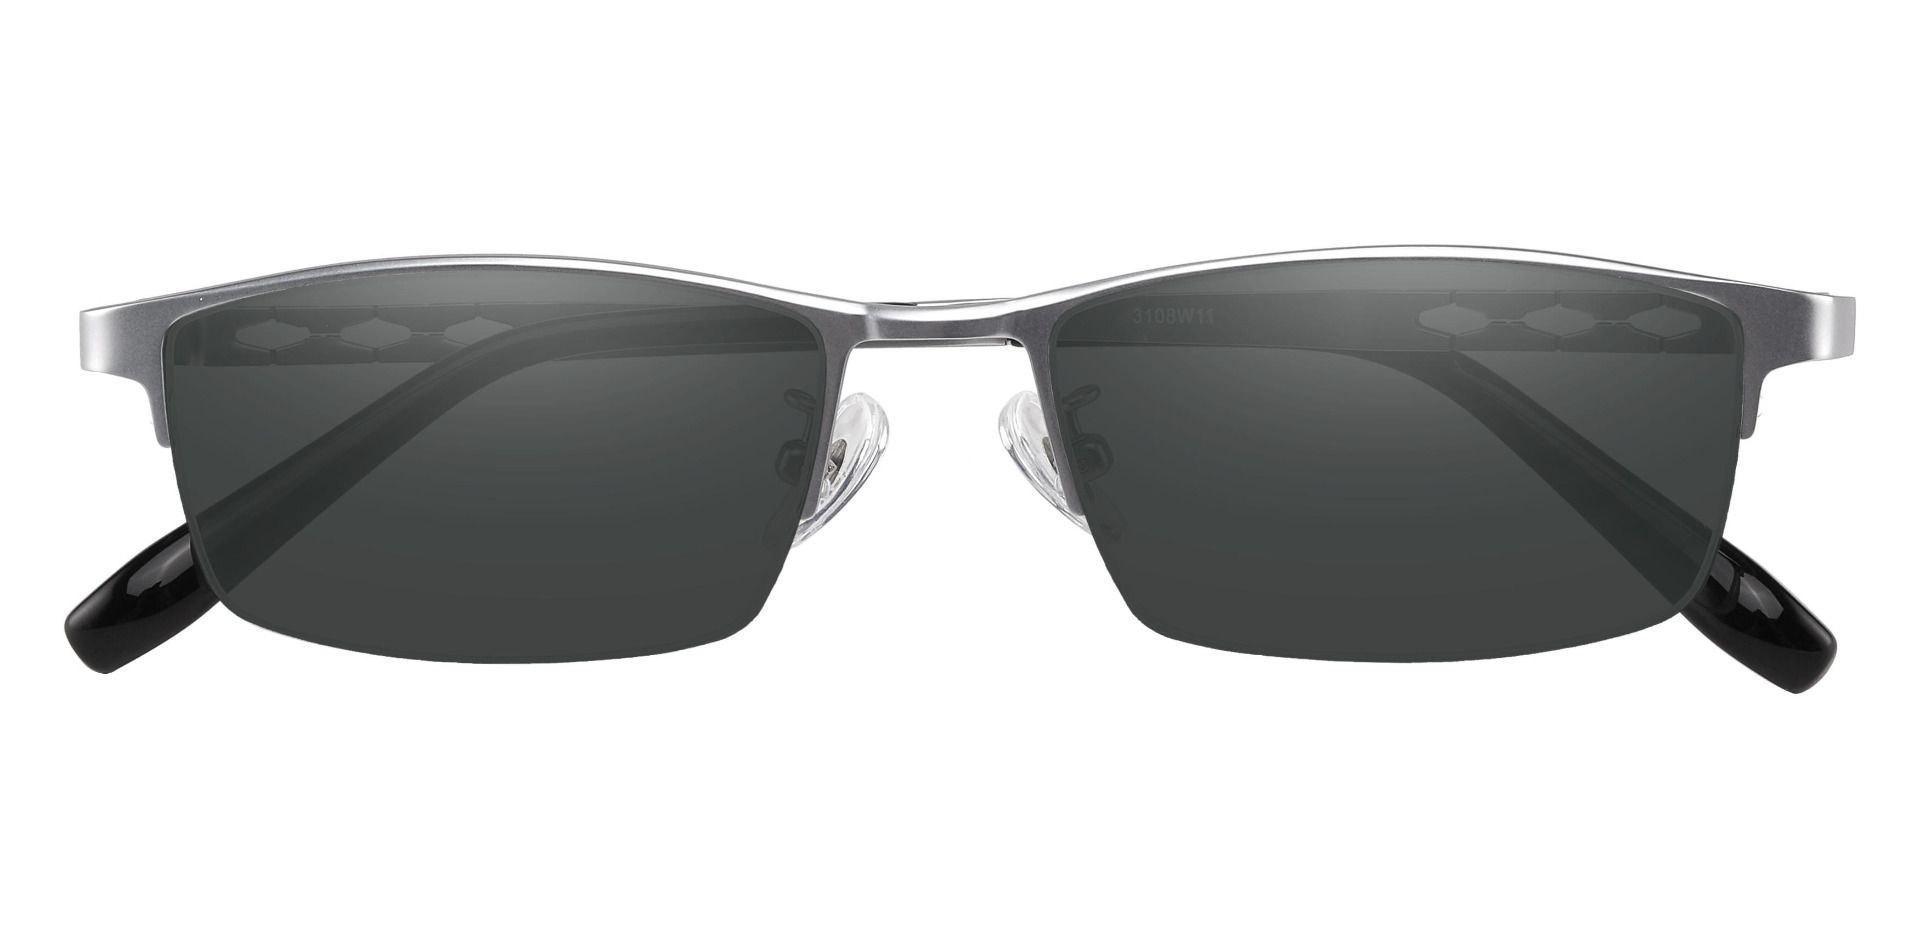 Burlington Rectangle Non-Rx Sunglasses - Silver Frame With Gray Lenses